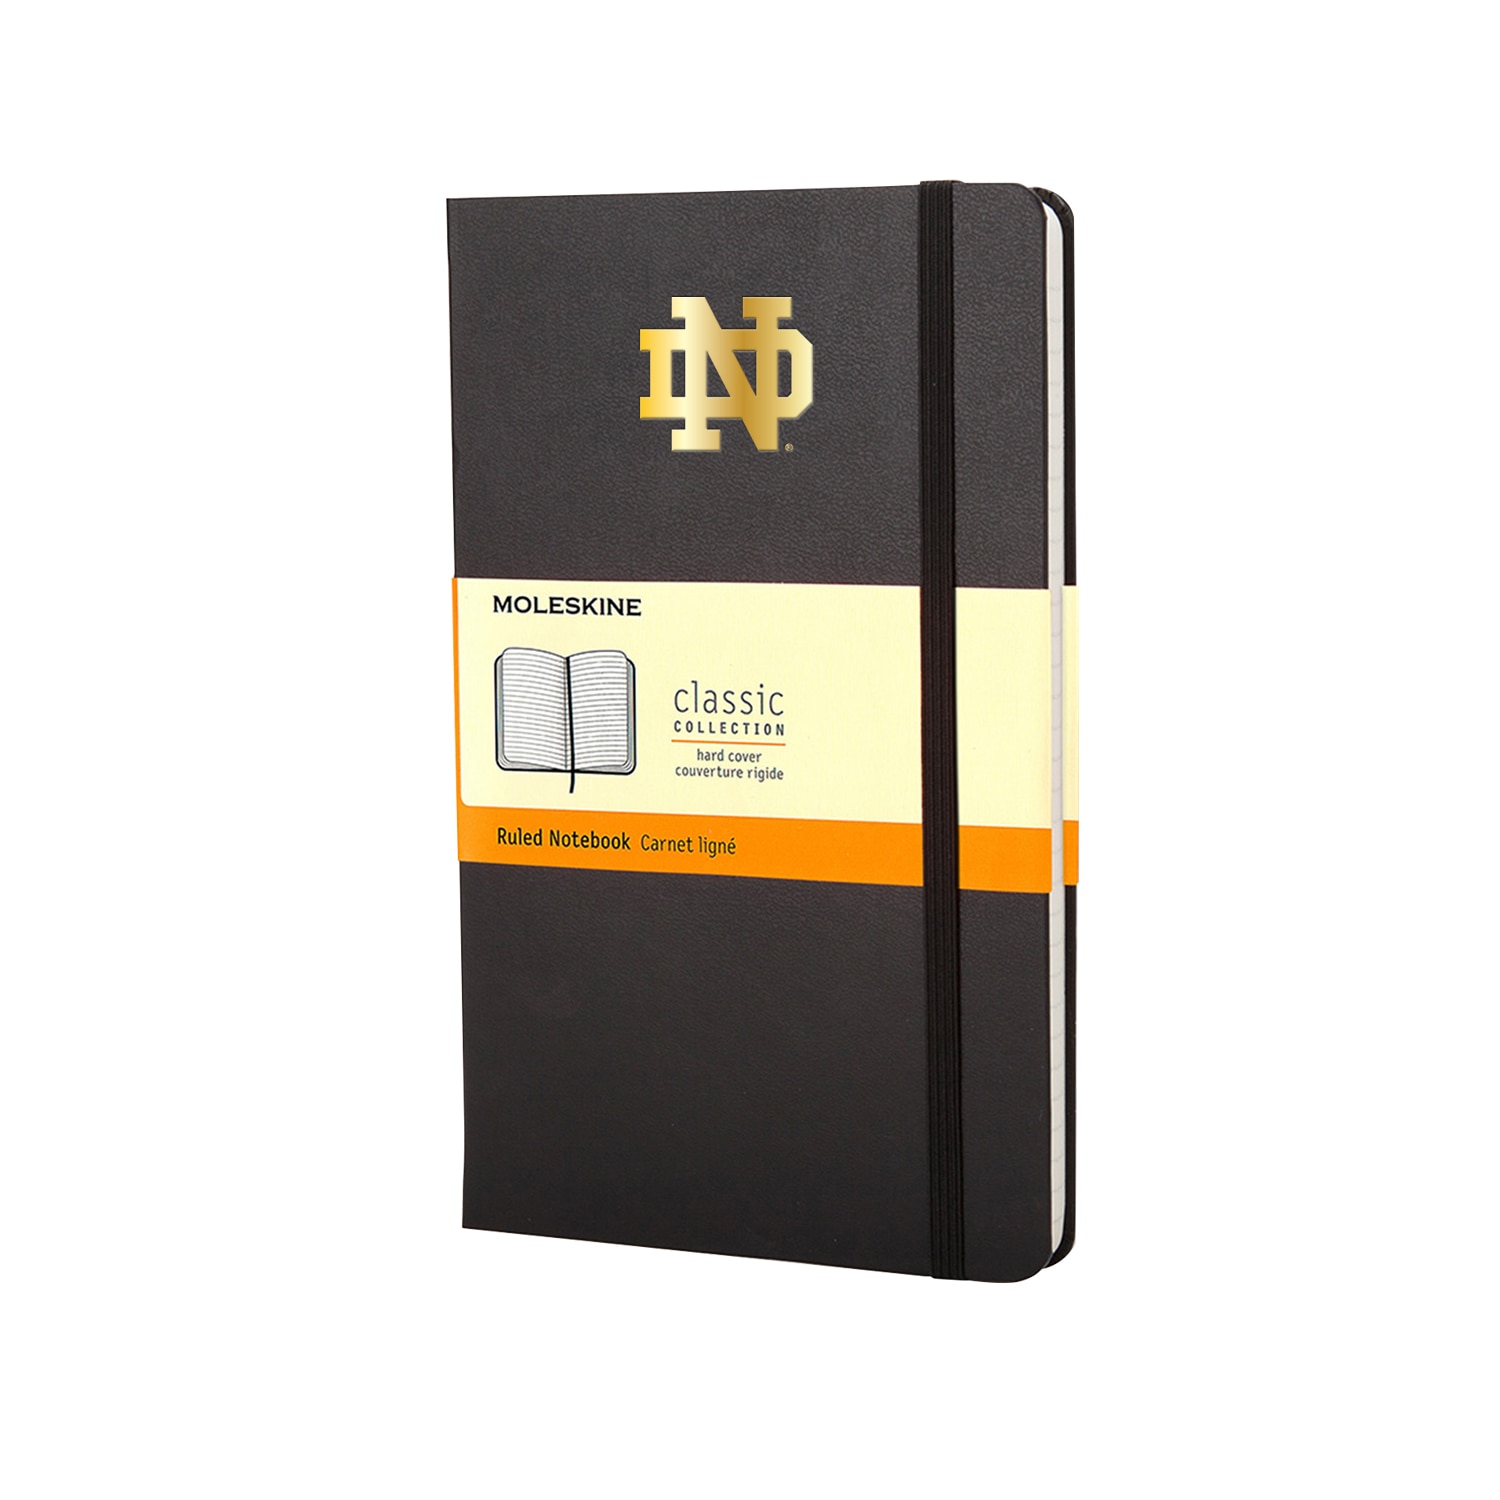 Moleskine Pocket Notebook With Foil Stamped School Name Ruled